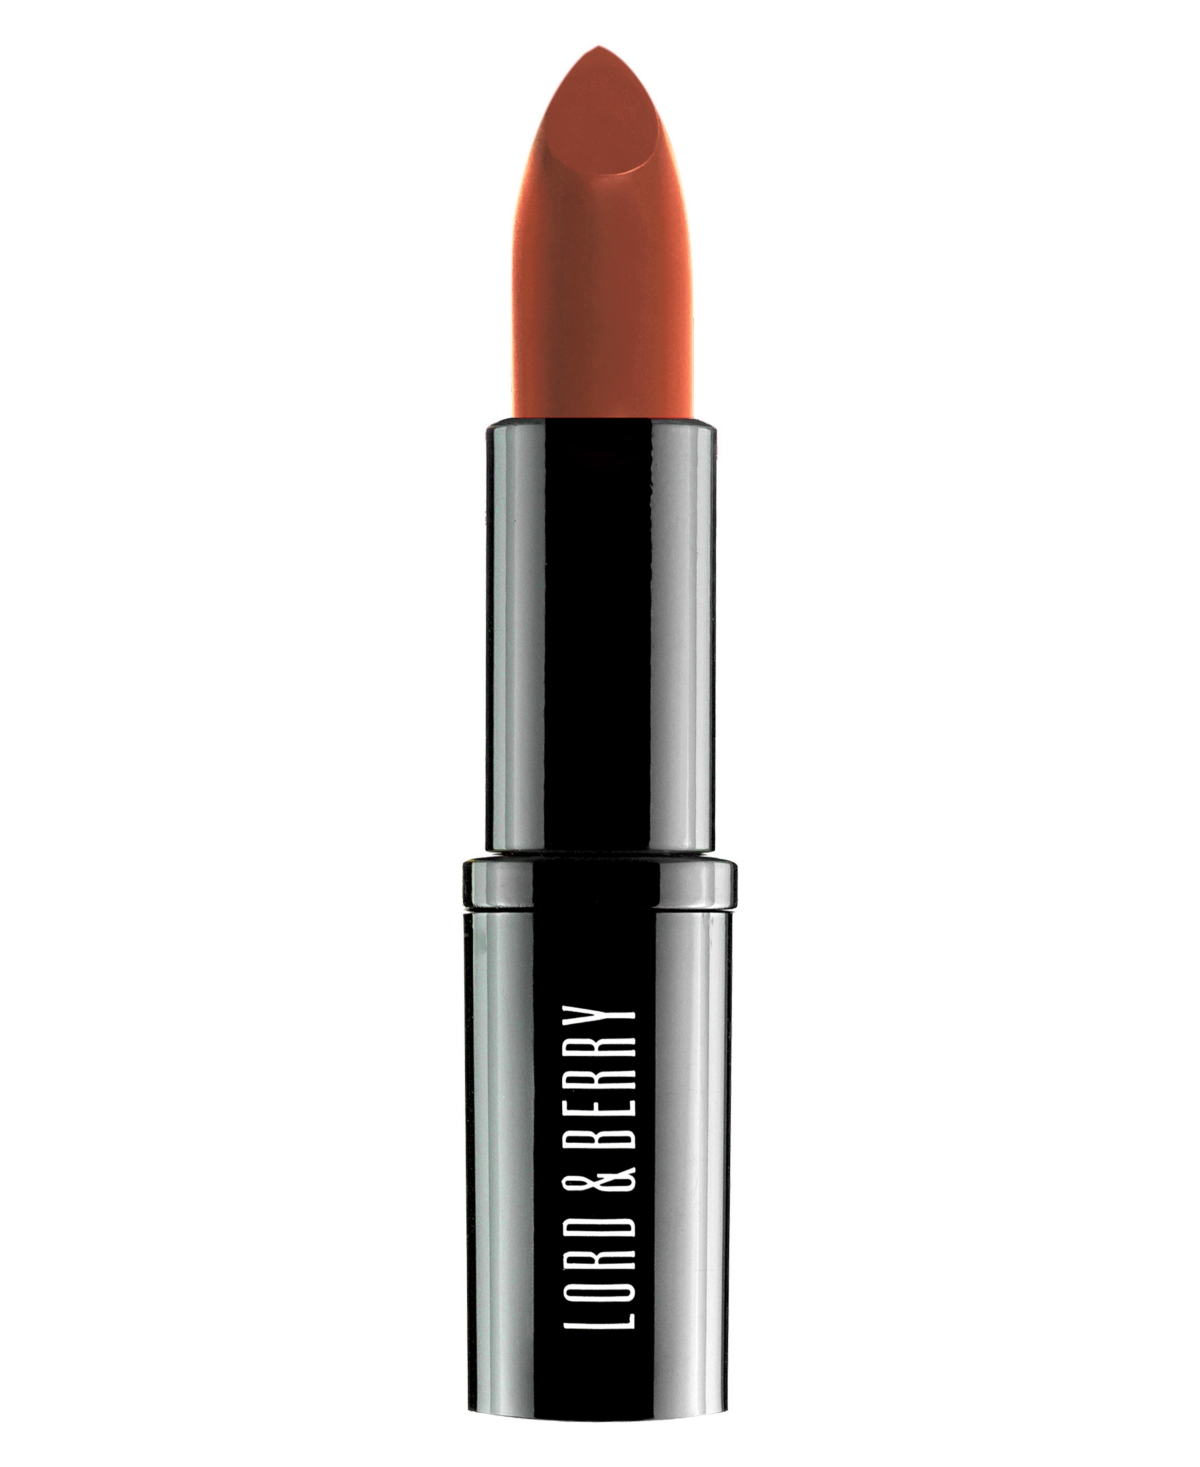 Lord & Berry Vogue Matte Lipstick In Vegas Sunset - Burnt Orange Brown